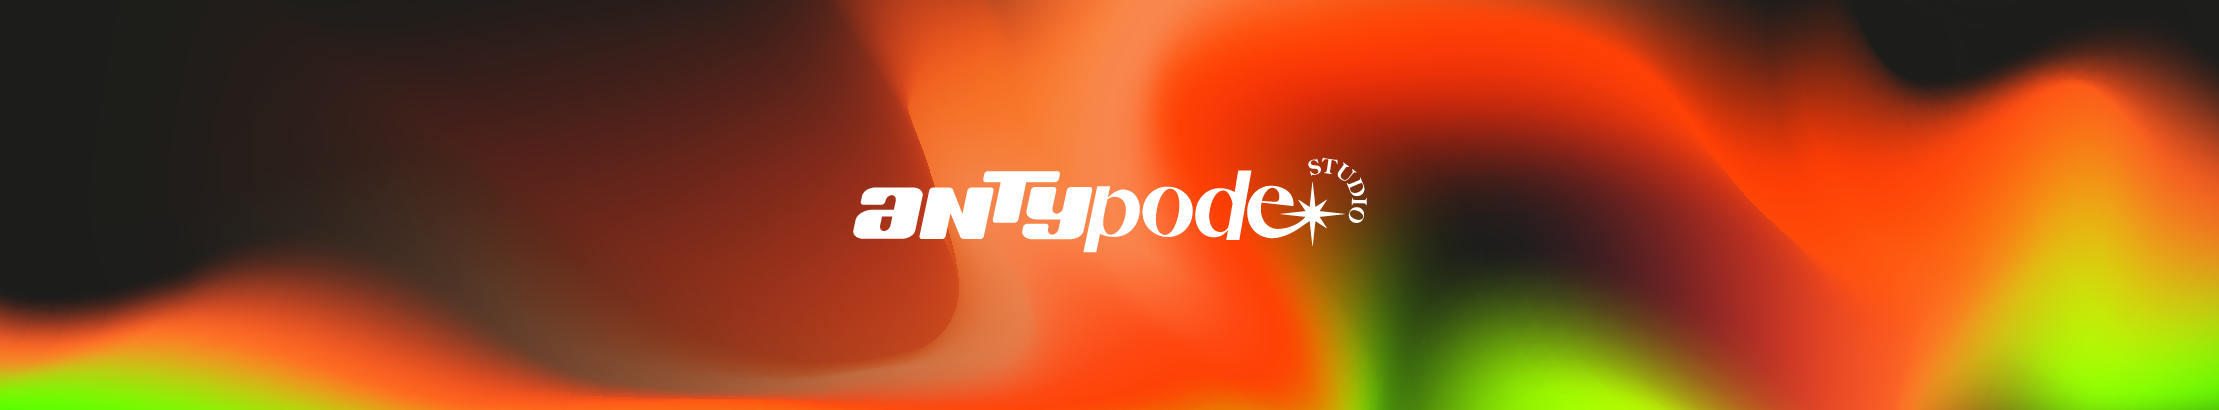 Antypode Studio's profile banner